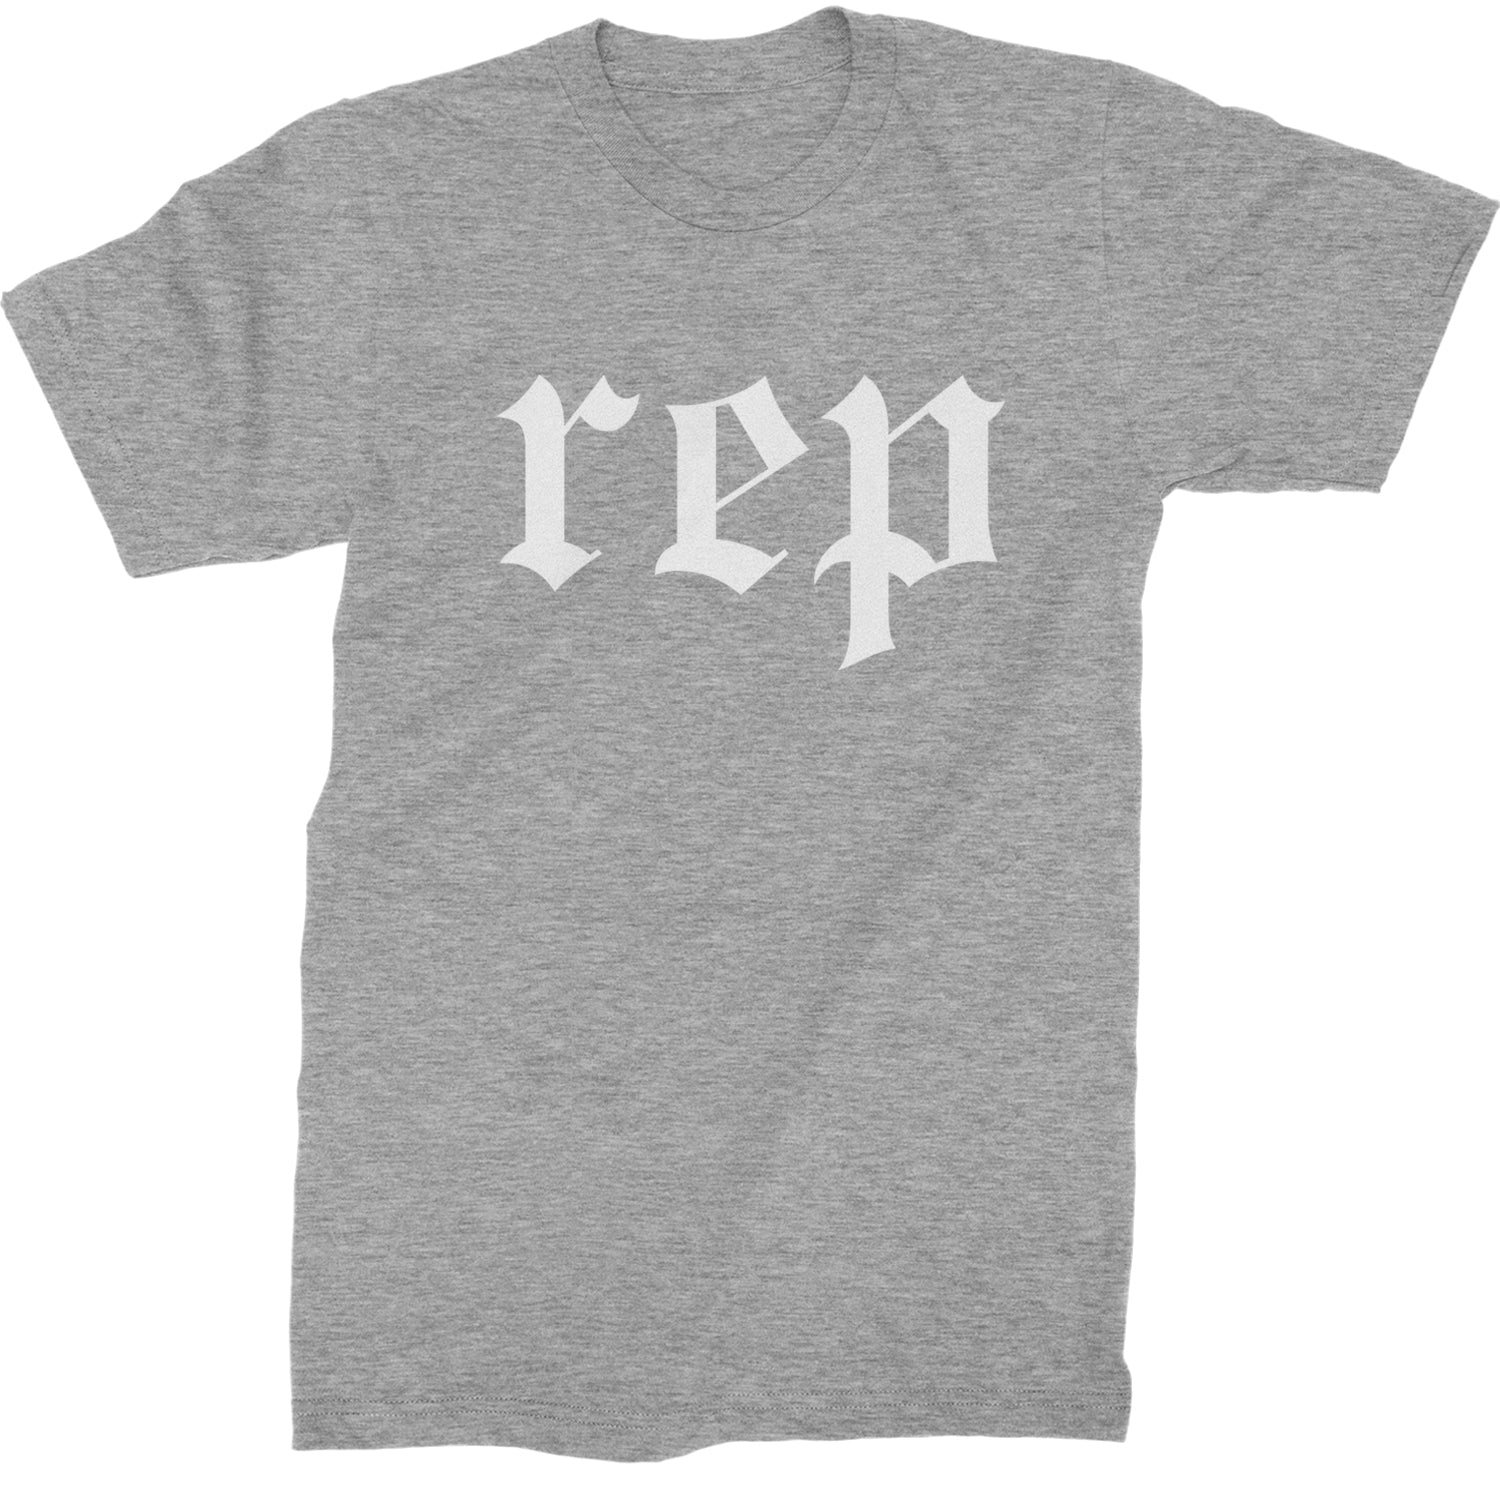 REP Reputation Eras Music Lover Gift Fan Favorite Mens T-shirt Heather Grey